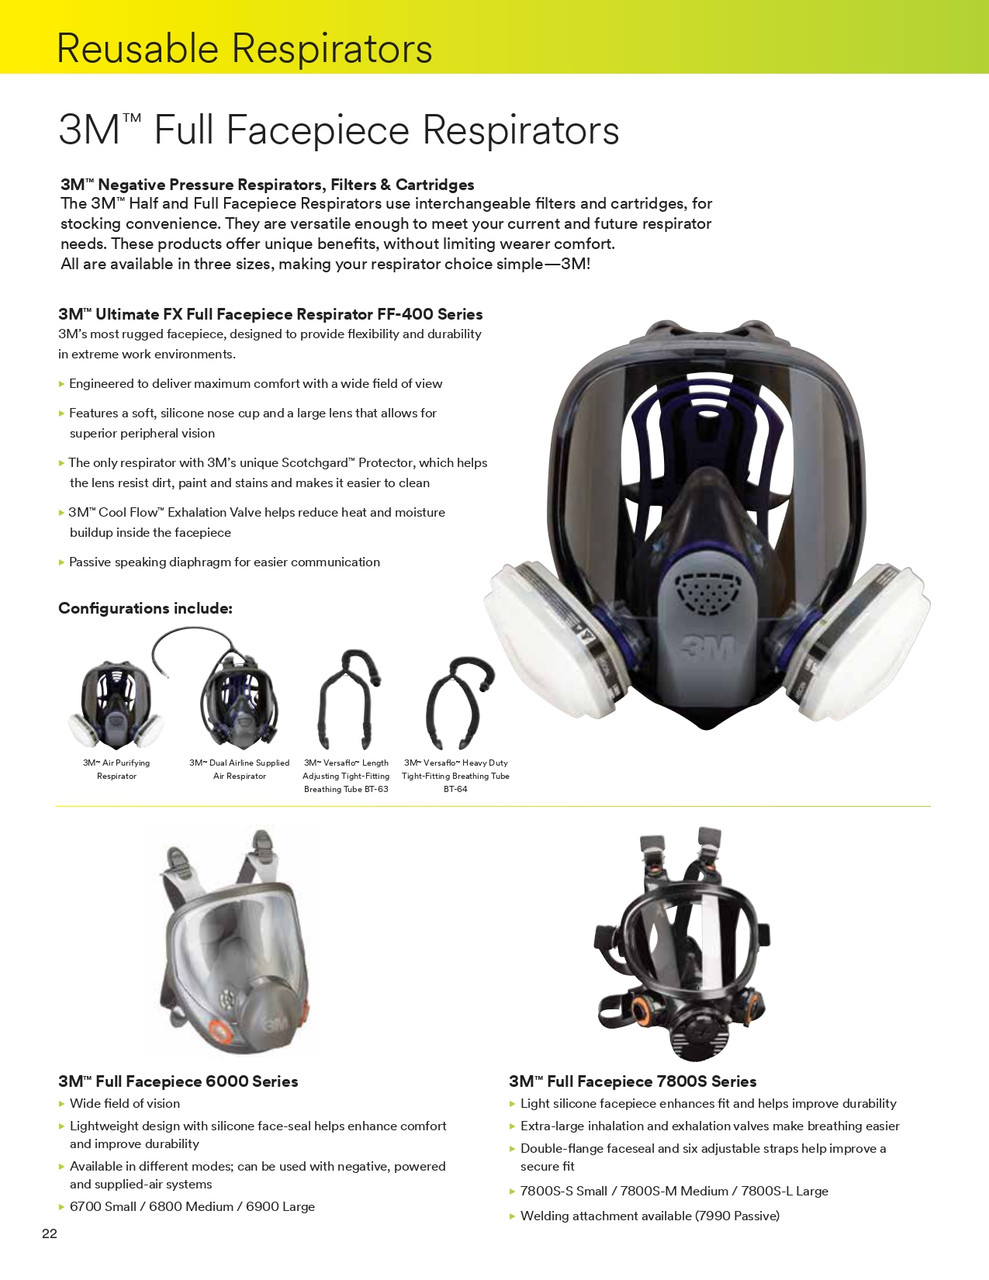 7800S Series Full Face Mask Reusable Respirator - Medium  7800S-M